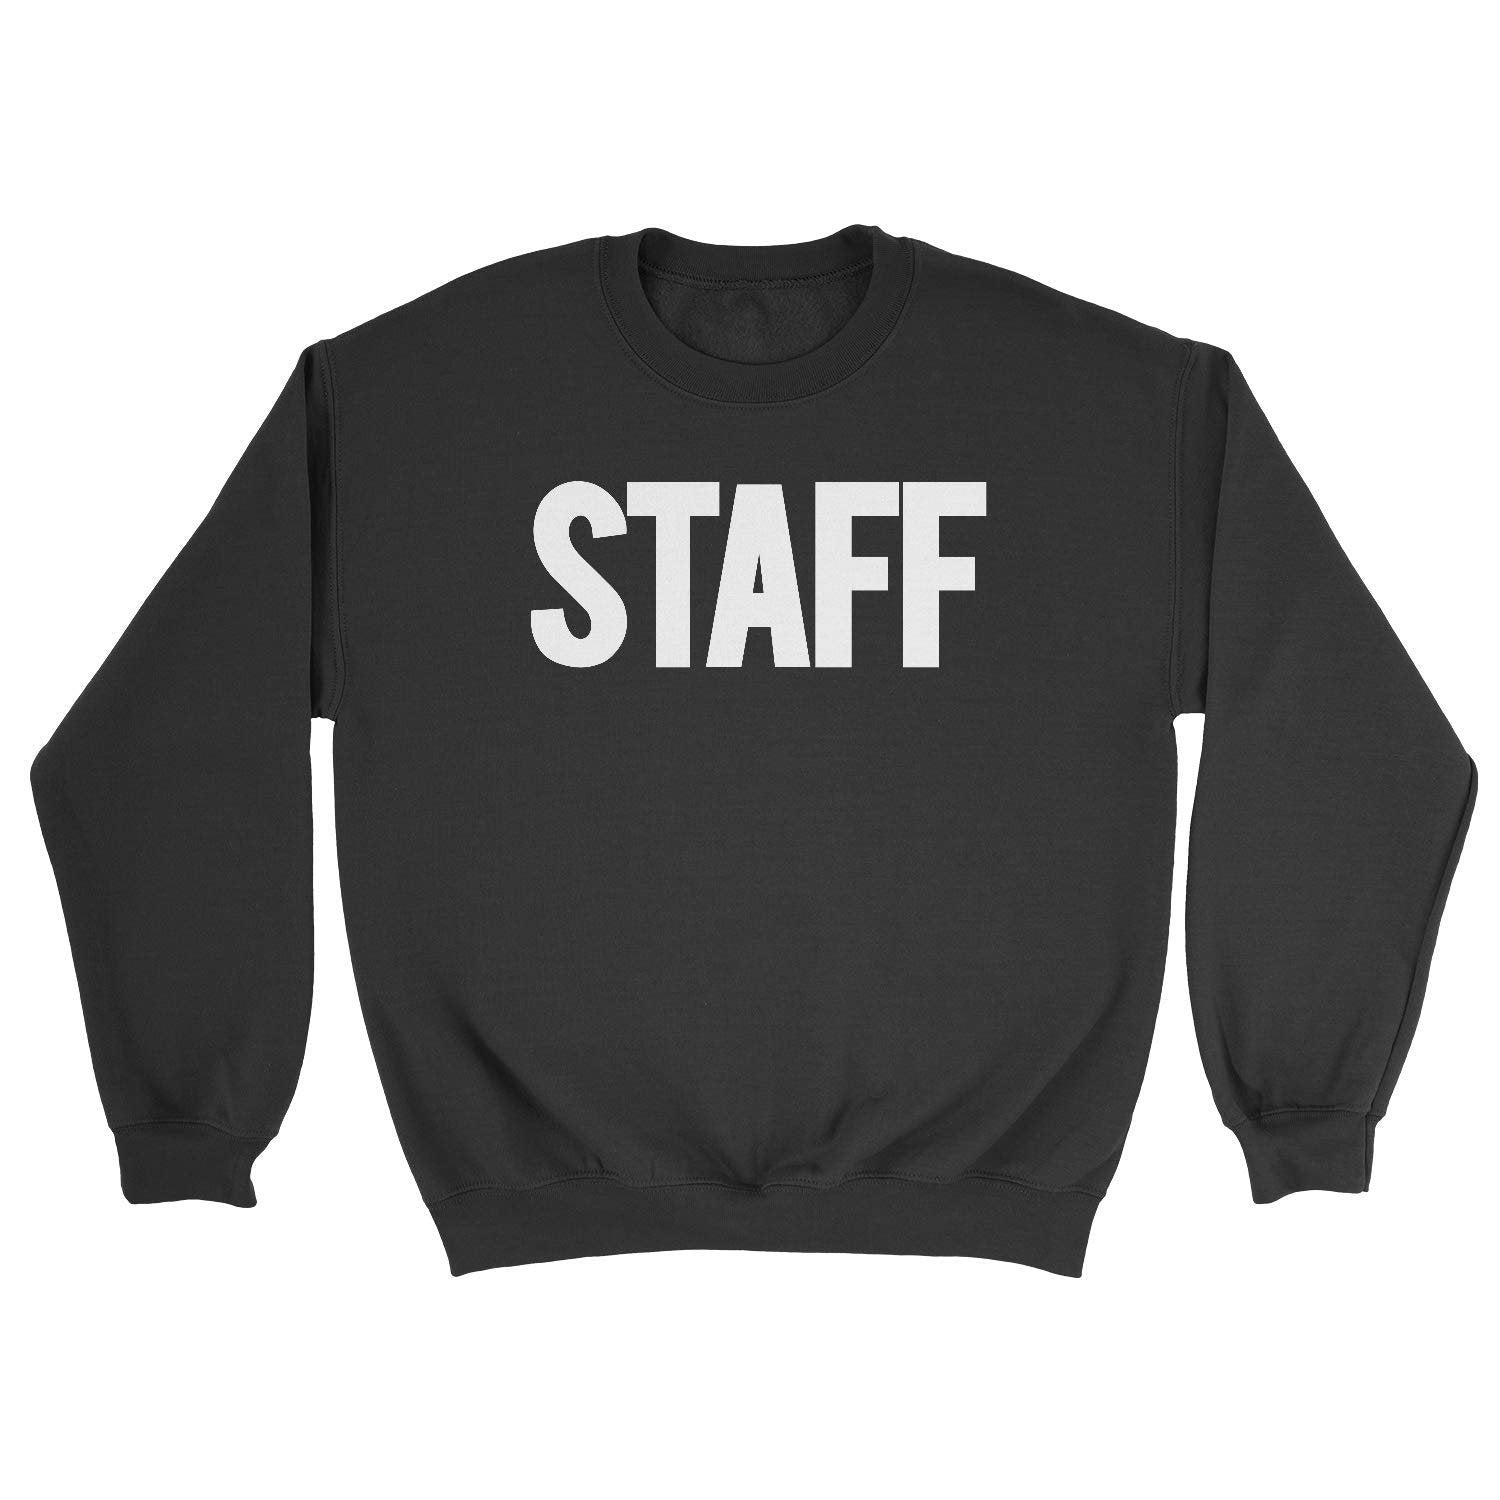 Staff Men's Sweatshirt Screen Printed USA Black & White Soft Shirt